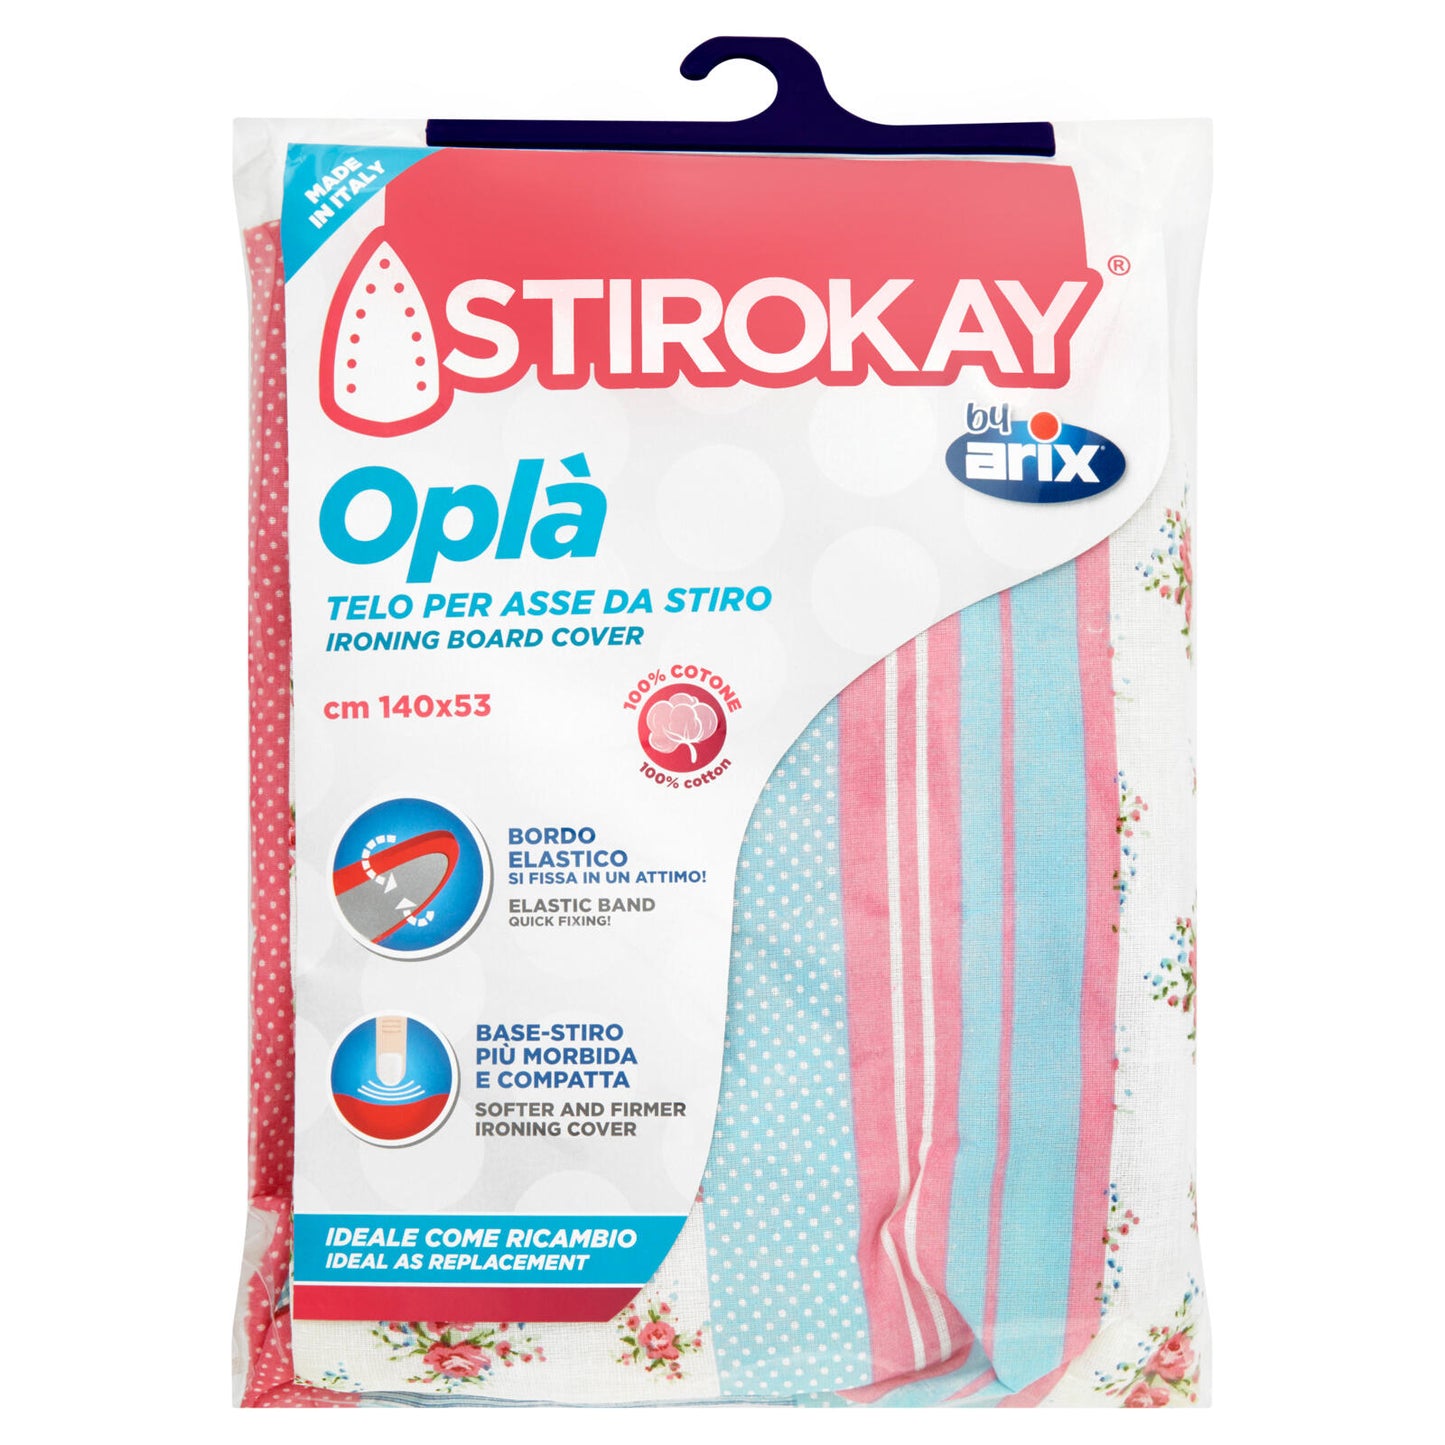 Stirokay Oplà cm 140x53